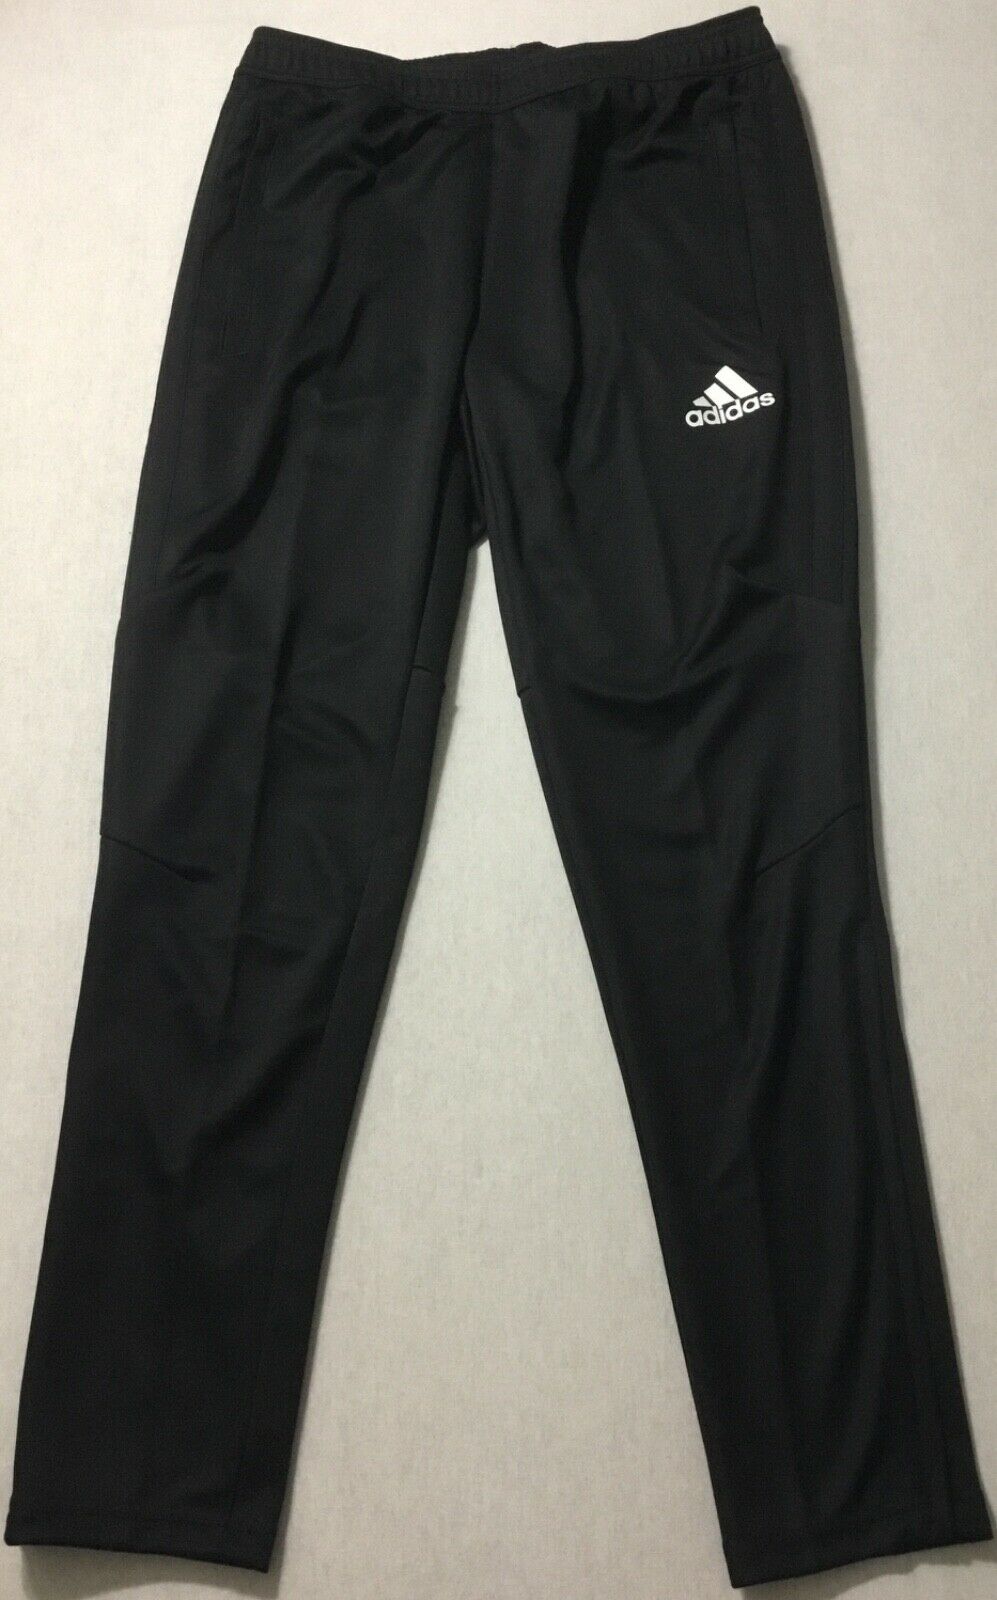 Adidas Men’s Tiro 17 Tapered Training Pants Bk0348 Black Size M